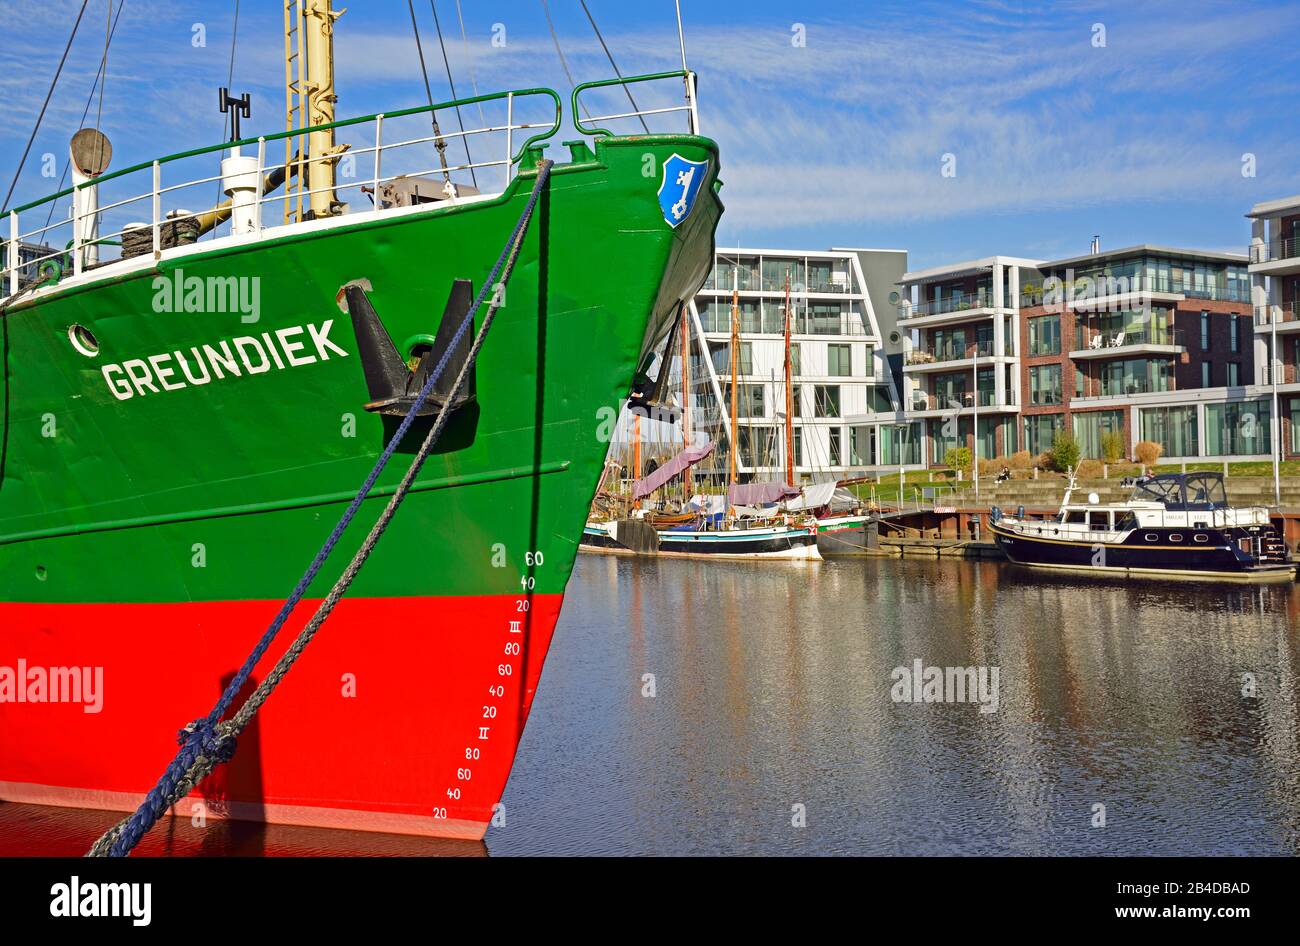 Europe, Germany, Lower Saxony, Stade, Hamburg metropolitan region, Hanseatic city, city harbour, museum ship Greundiek, Stock Photo